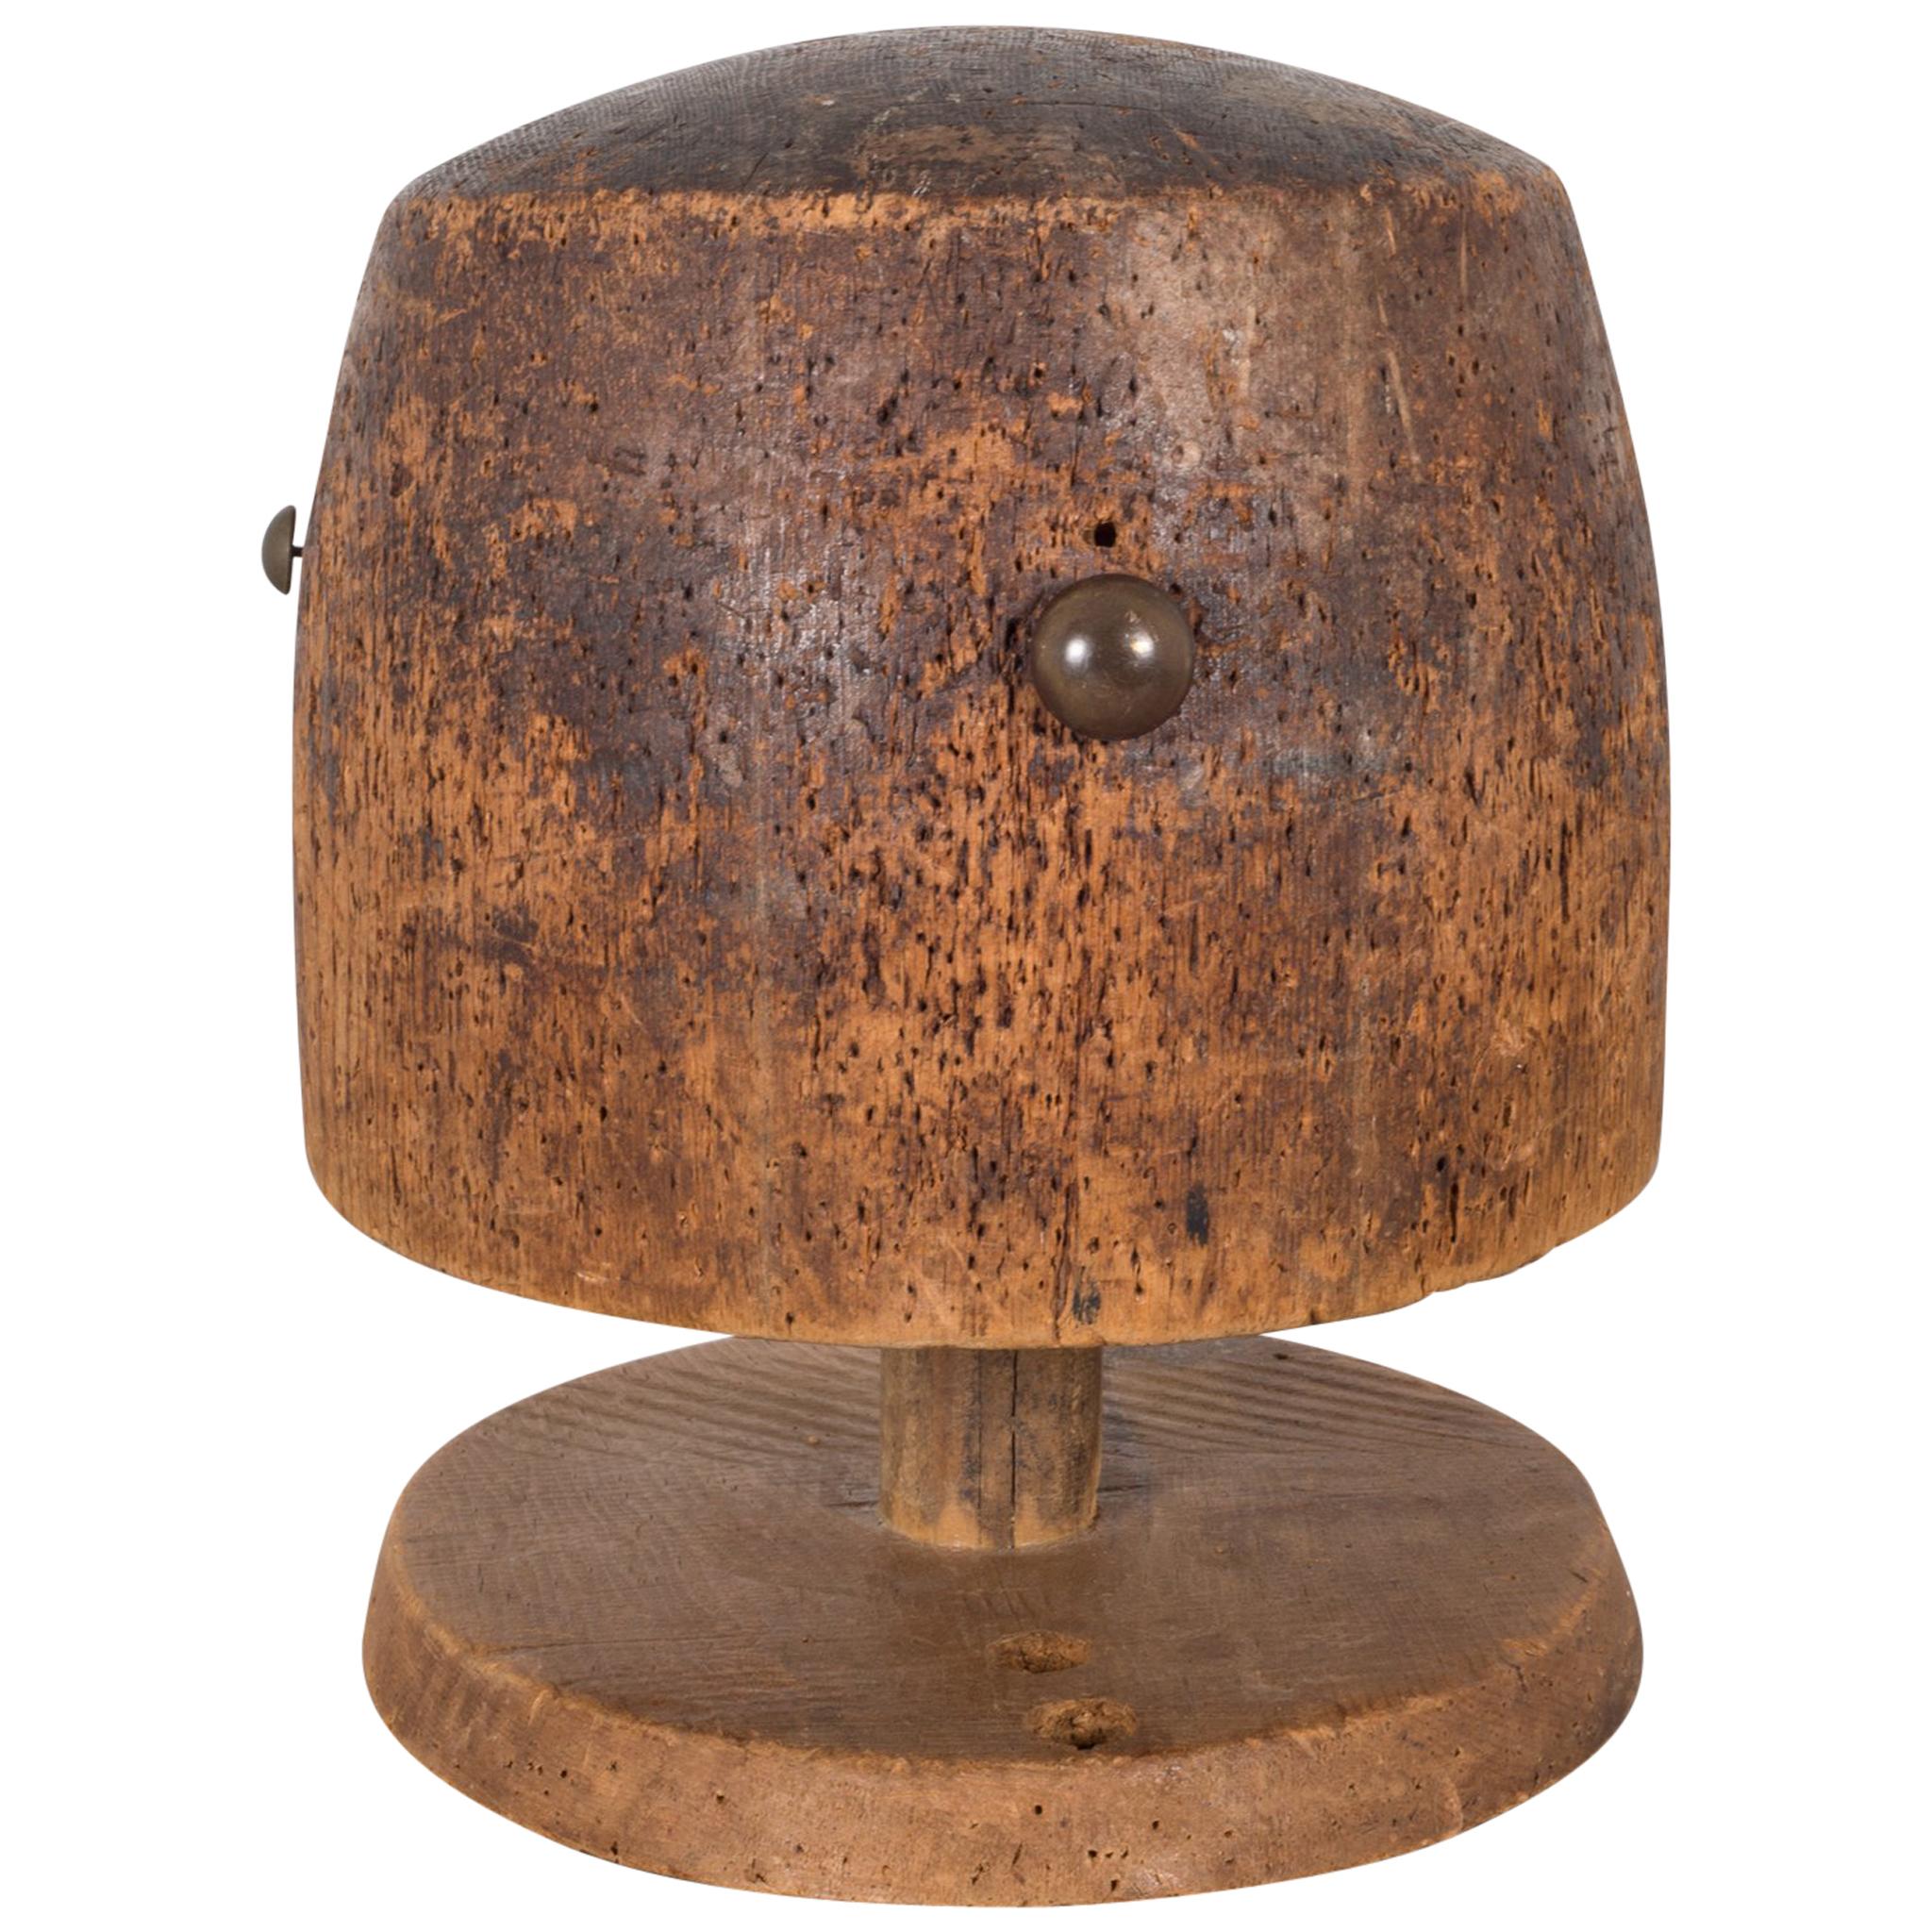 Antique Wooden Hat Mold, circa 1860-1920